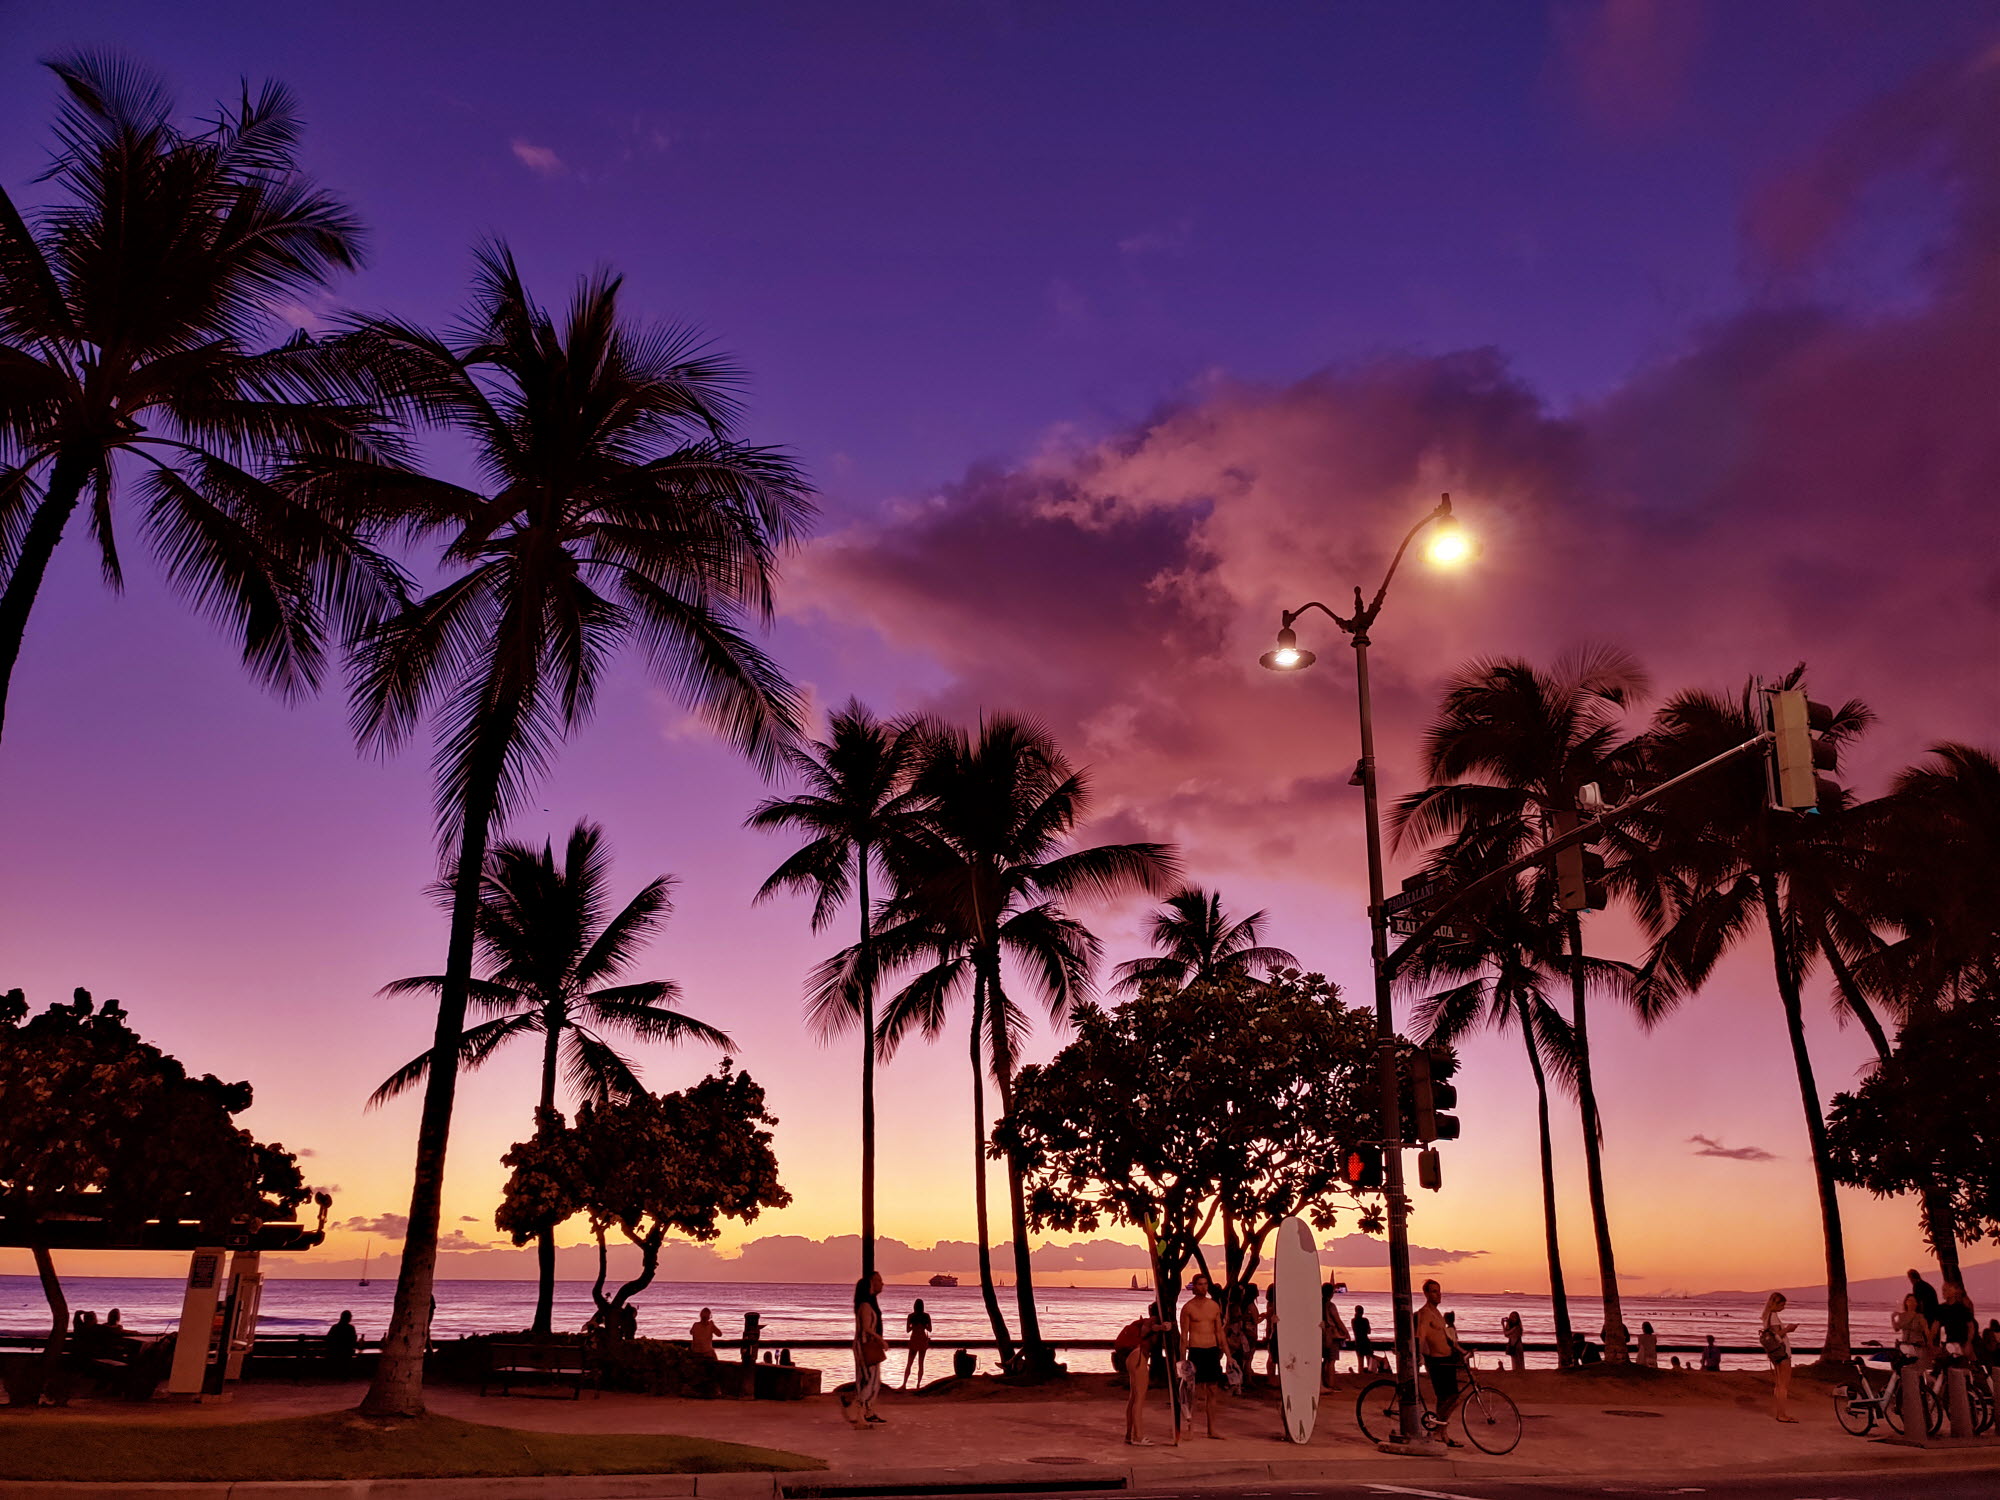 LG V50S ThinQ로 촬영한 하와이의 아름다운 사진 공개